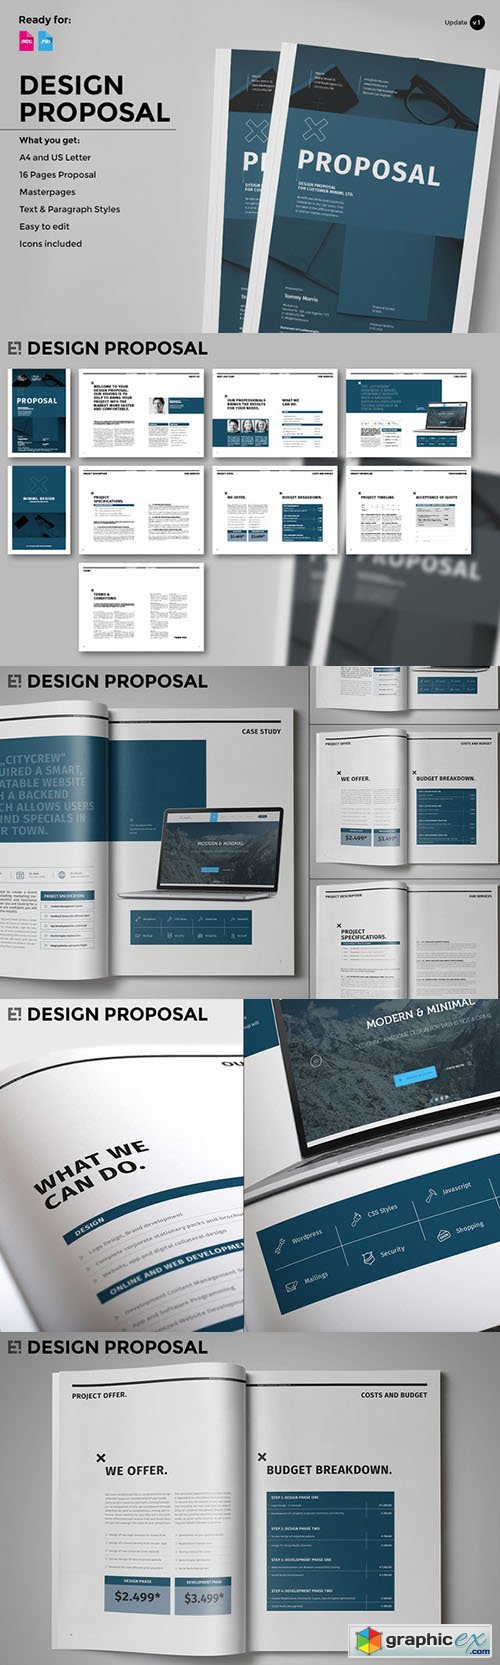  Design Proposal